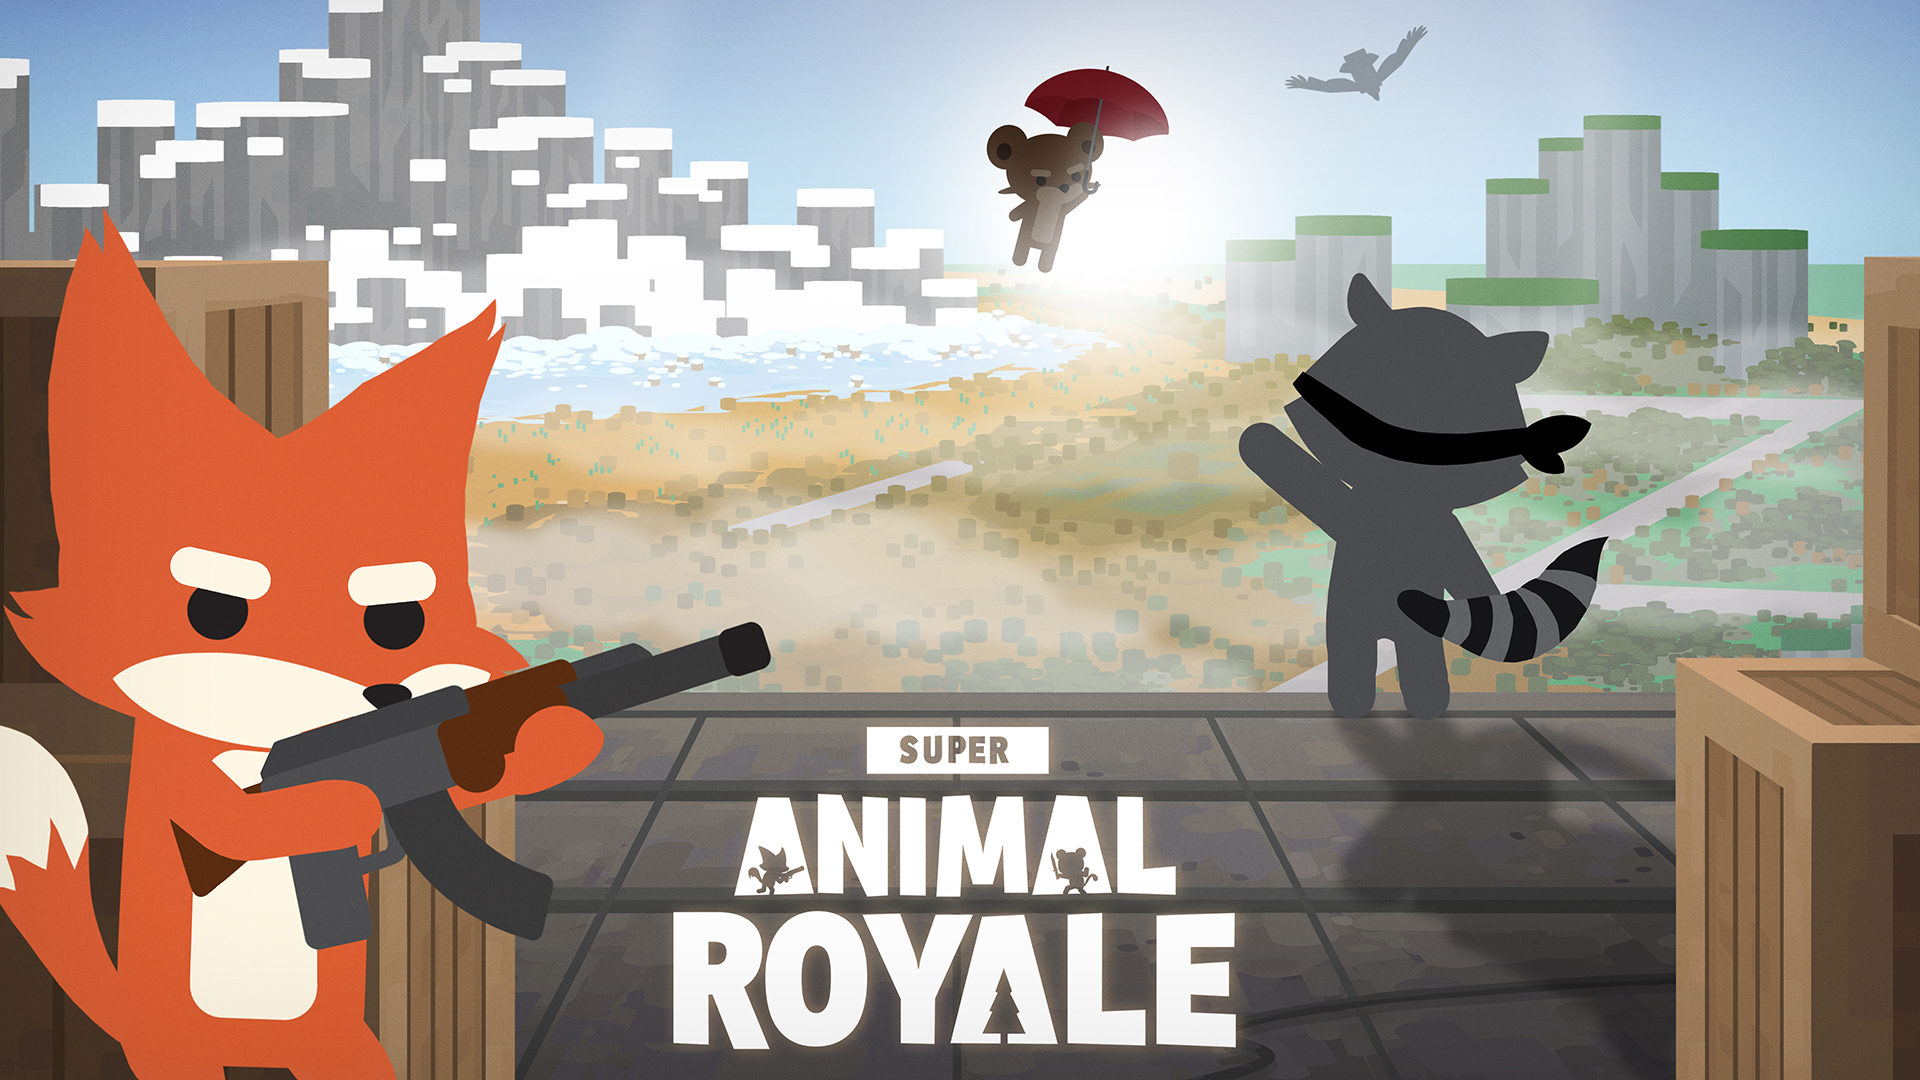 super animal royale, video game Aesthetic wallpaper